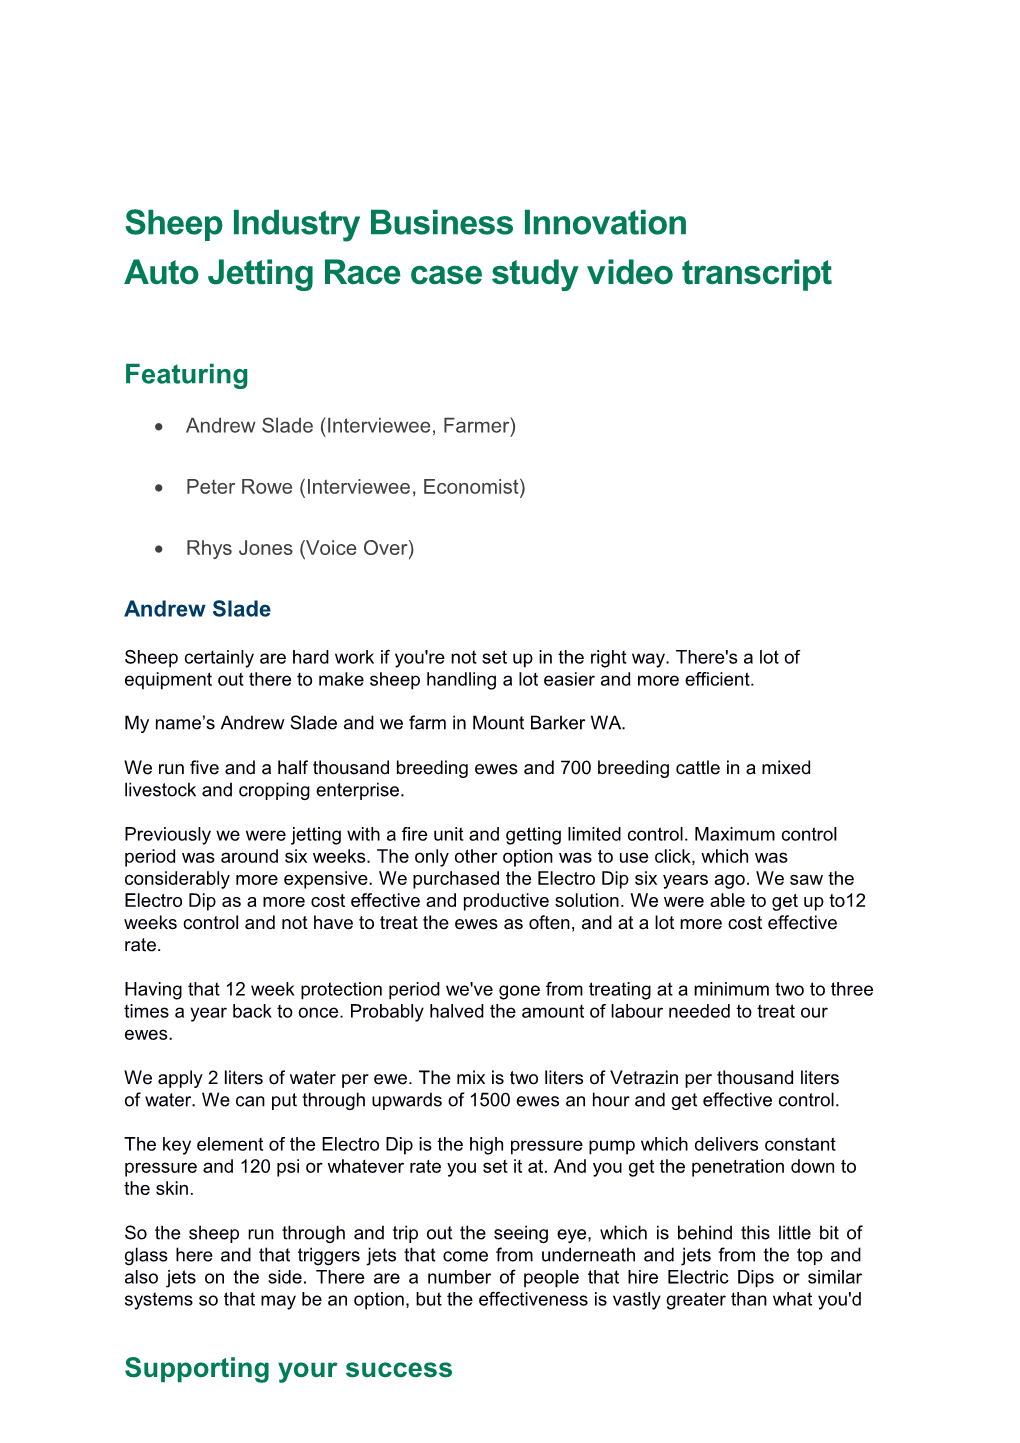 Auto Jetting Race Case Study Video Transcript